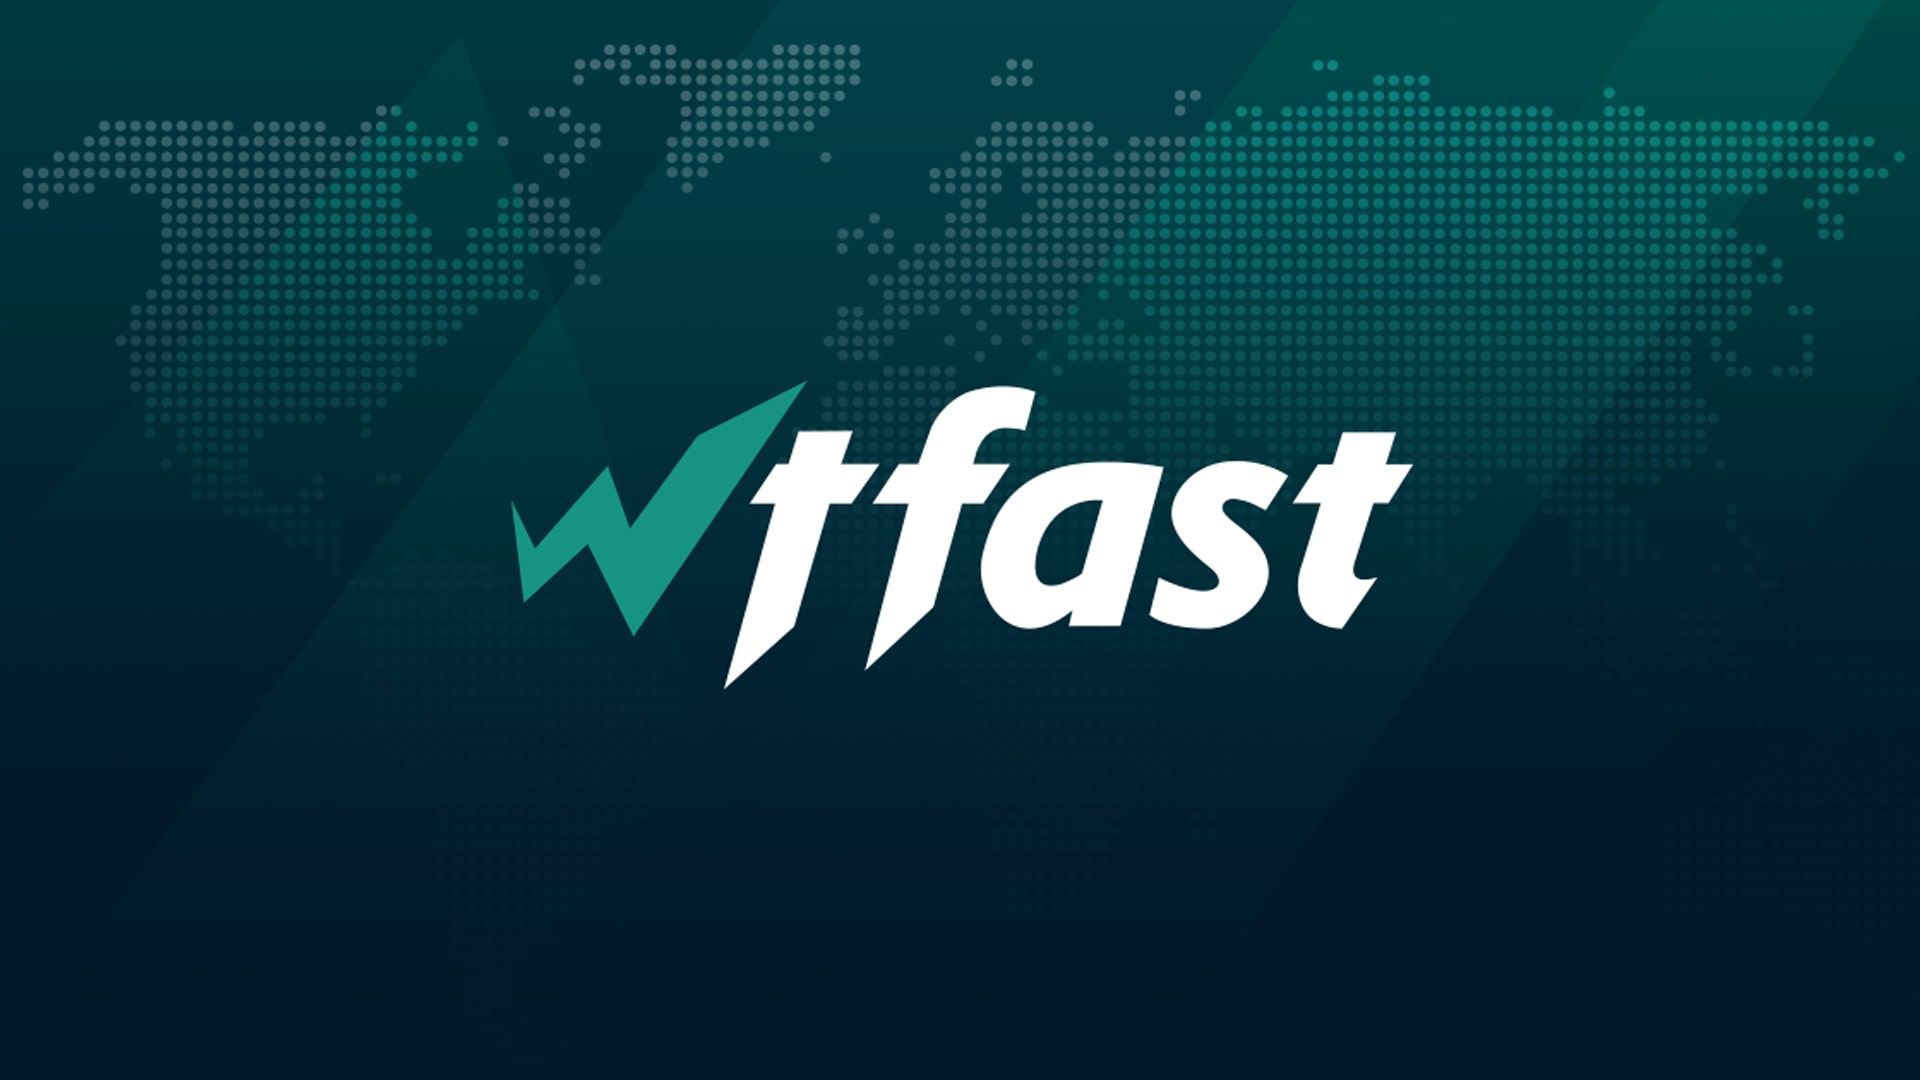 WTFast logo illustration, representing software for online gaming performance optimization.